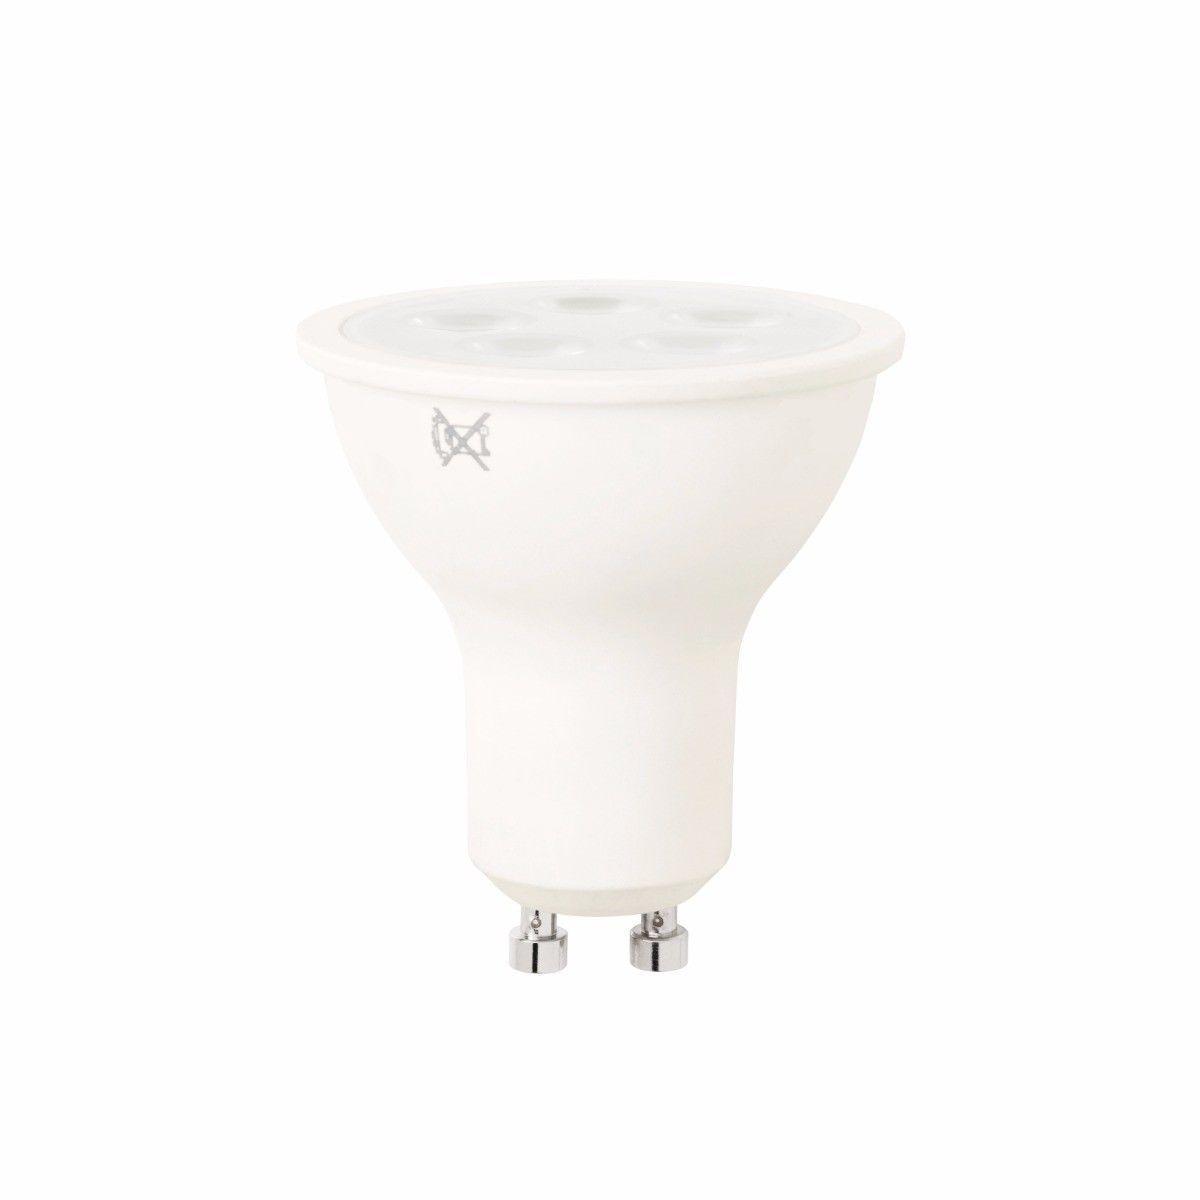 PIFCO LED 7 Watt 560 Lumens GU10 Bulb Cool Light Bulb DIY Home Lighting 1 Pack 1469 (Large Letter Rate)